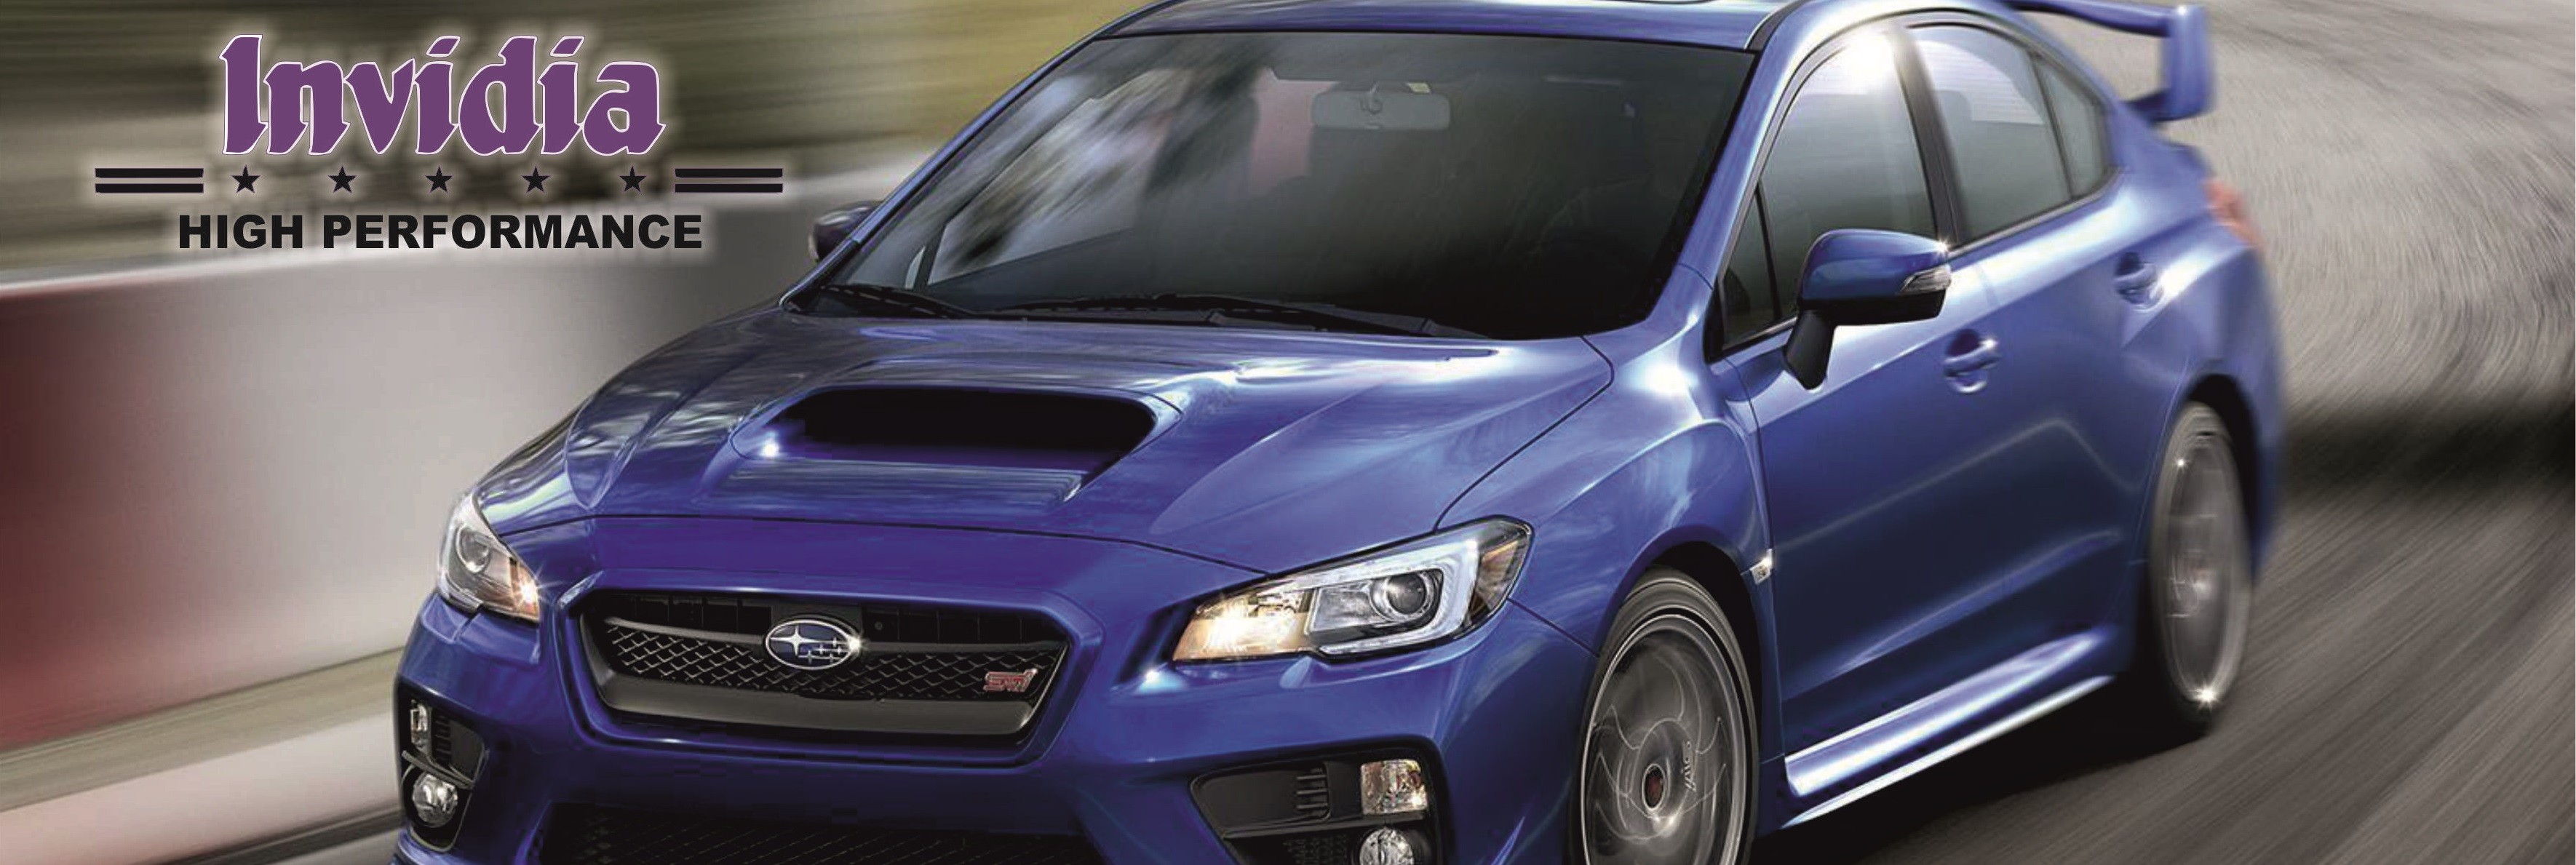 Invidia Subaru STI 2015